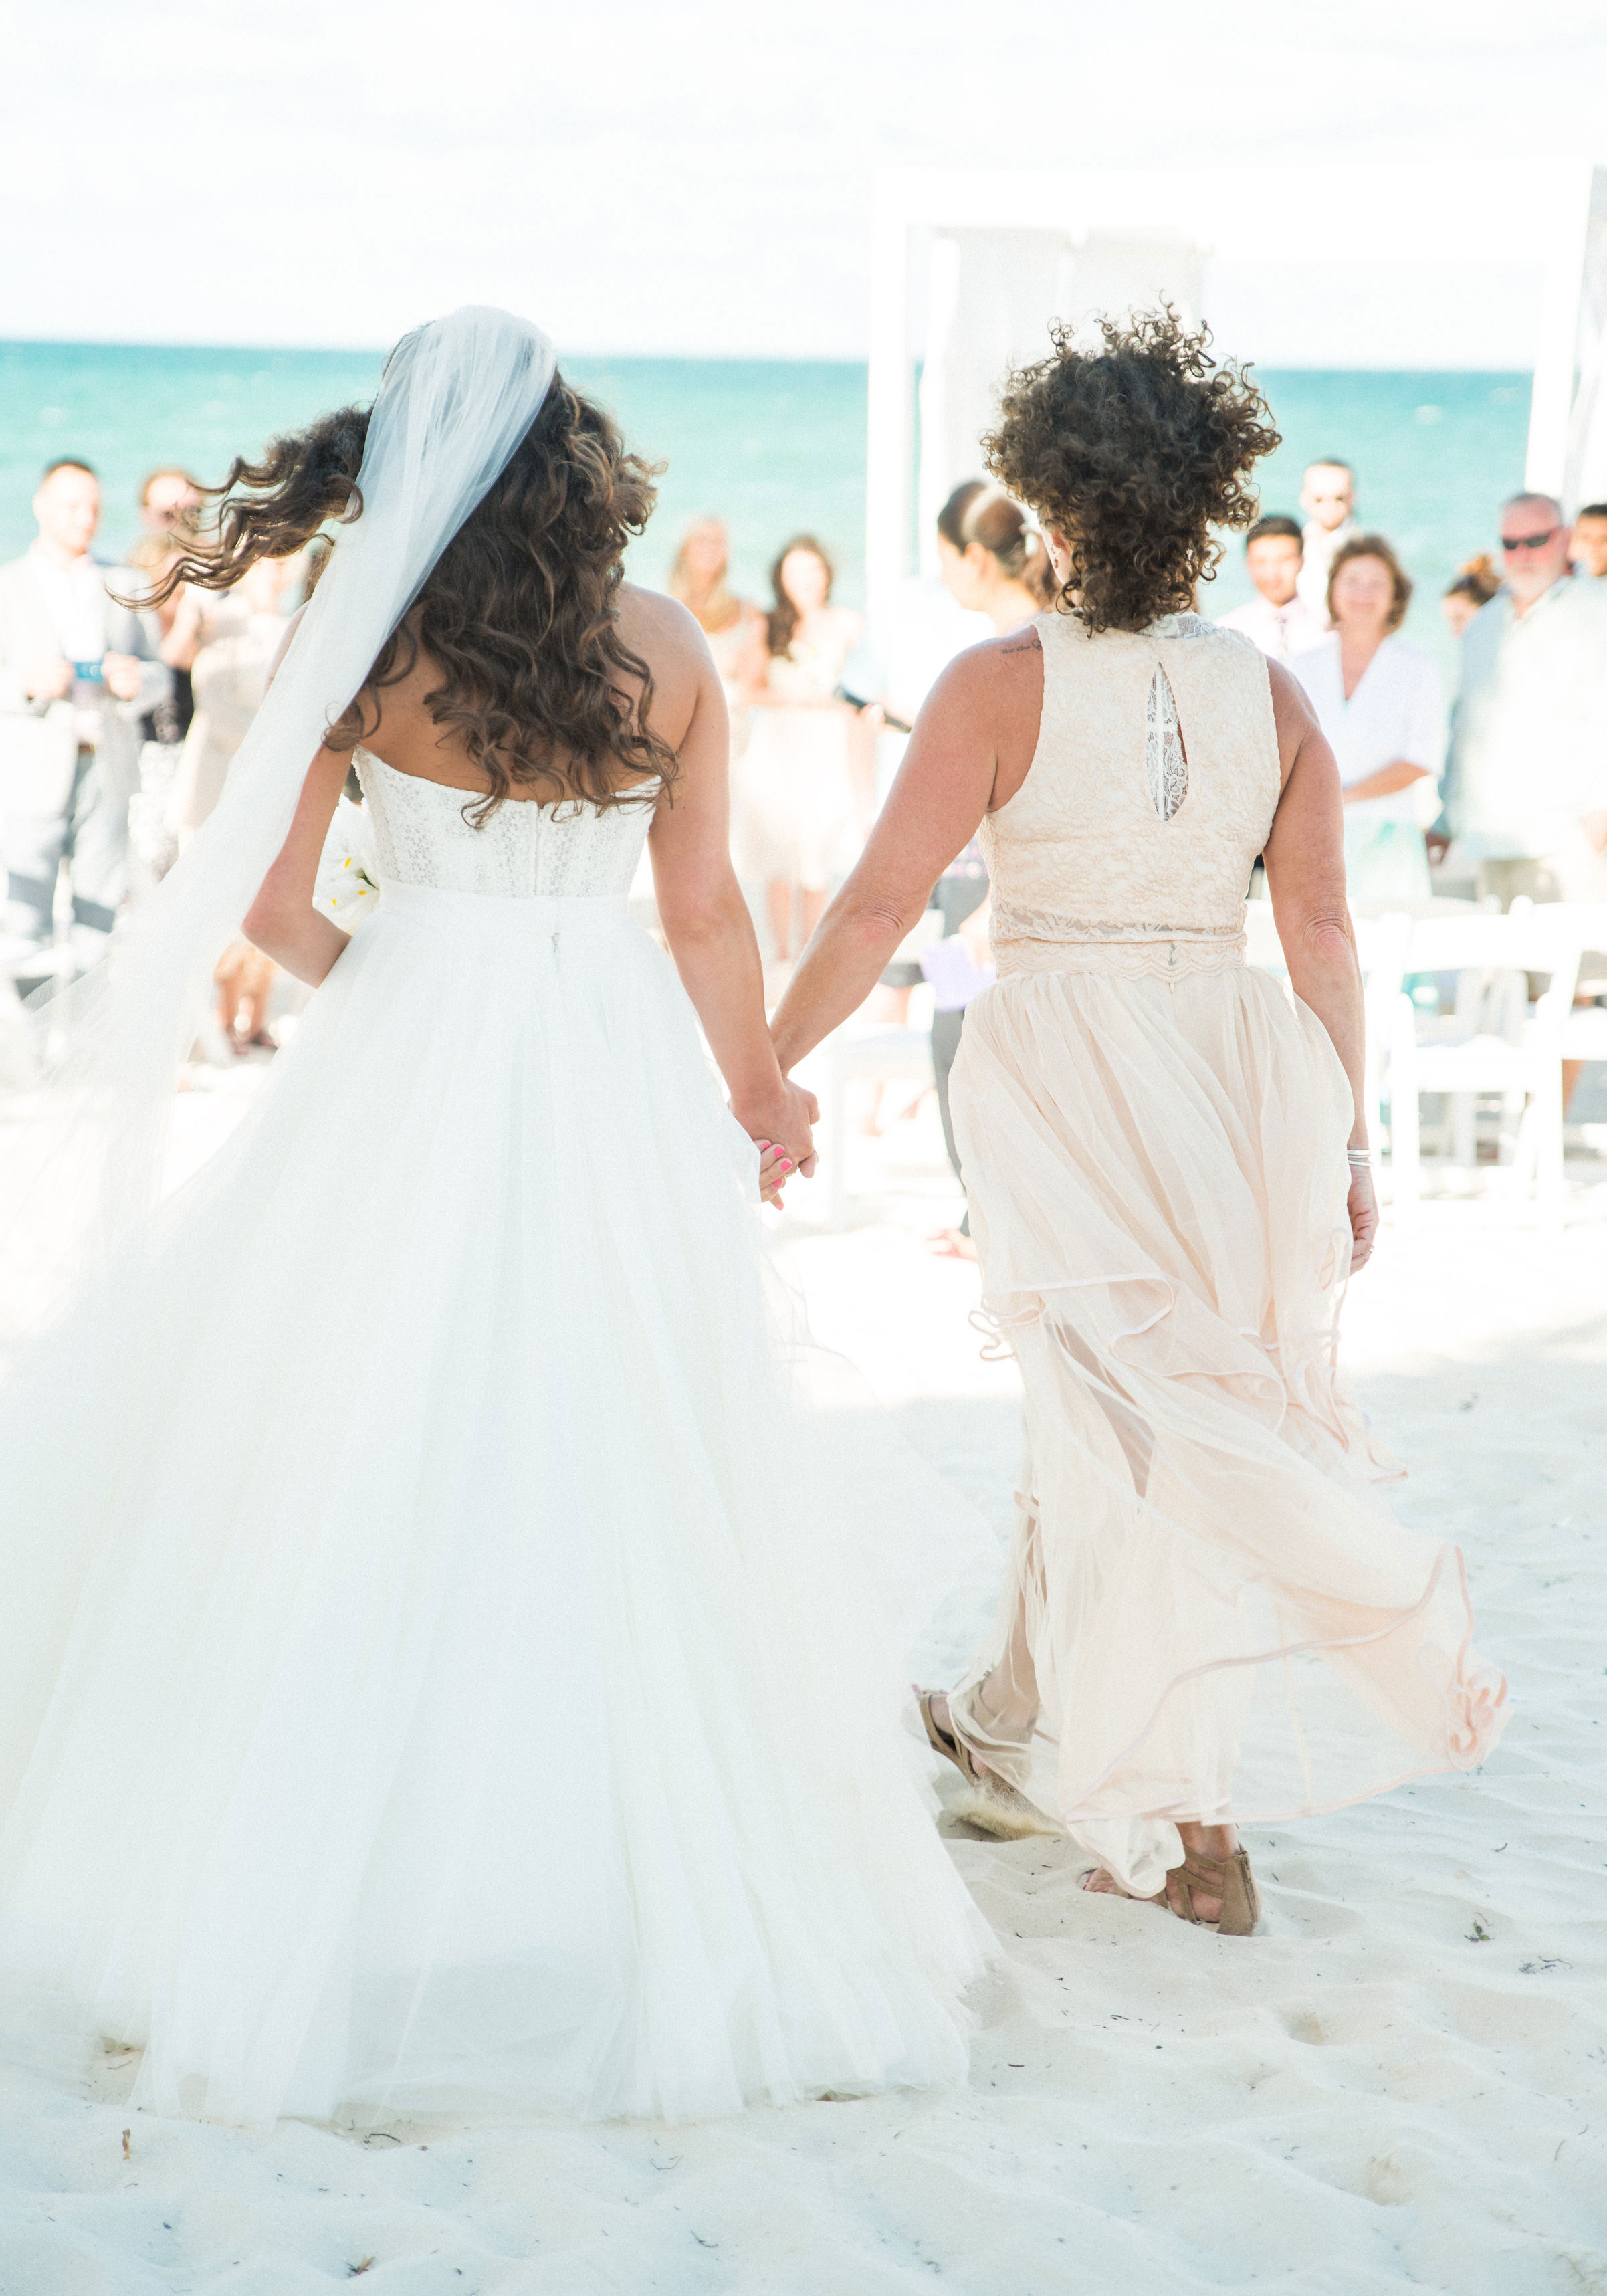 Beach wedding, Mom walking bride down the aisle, Bridal separates, Watters Ashan skirt.